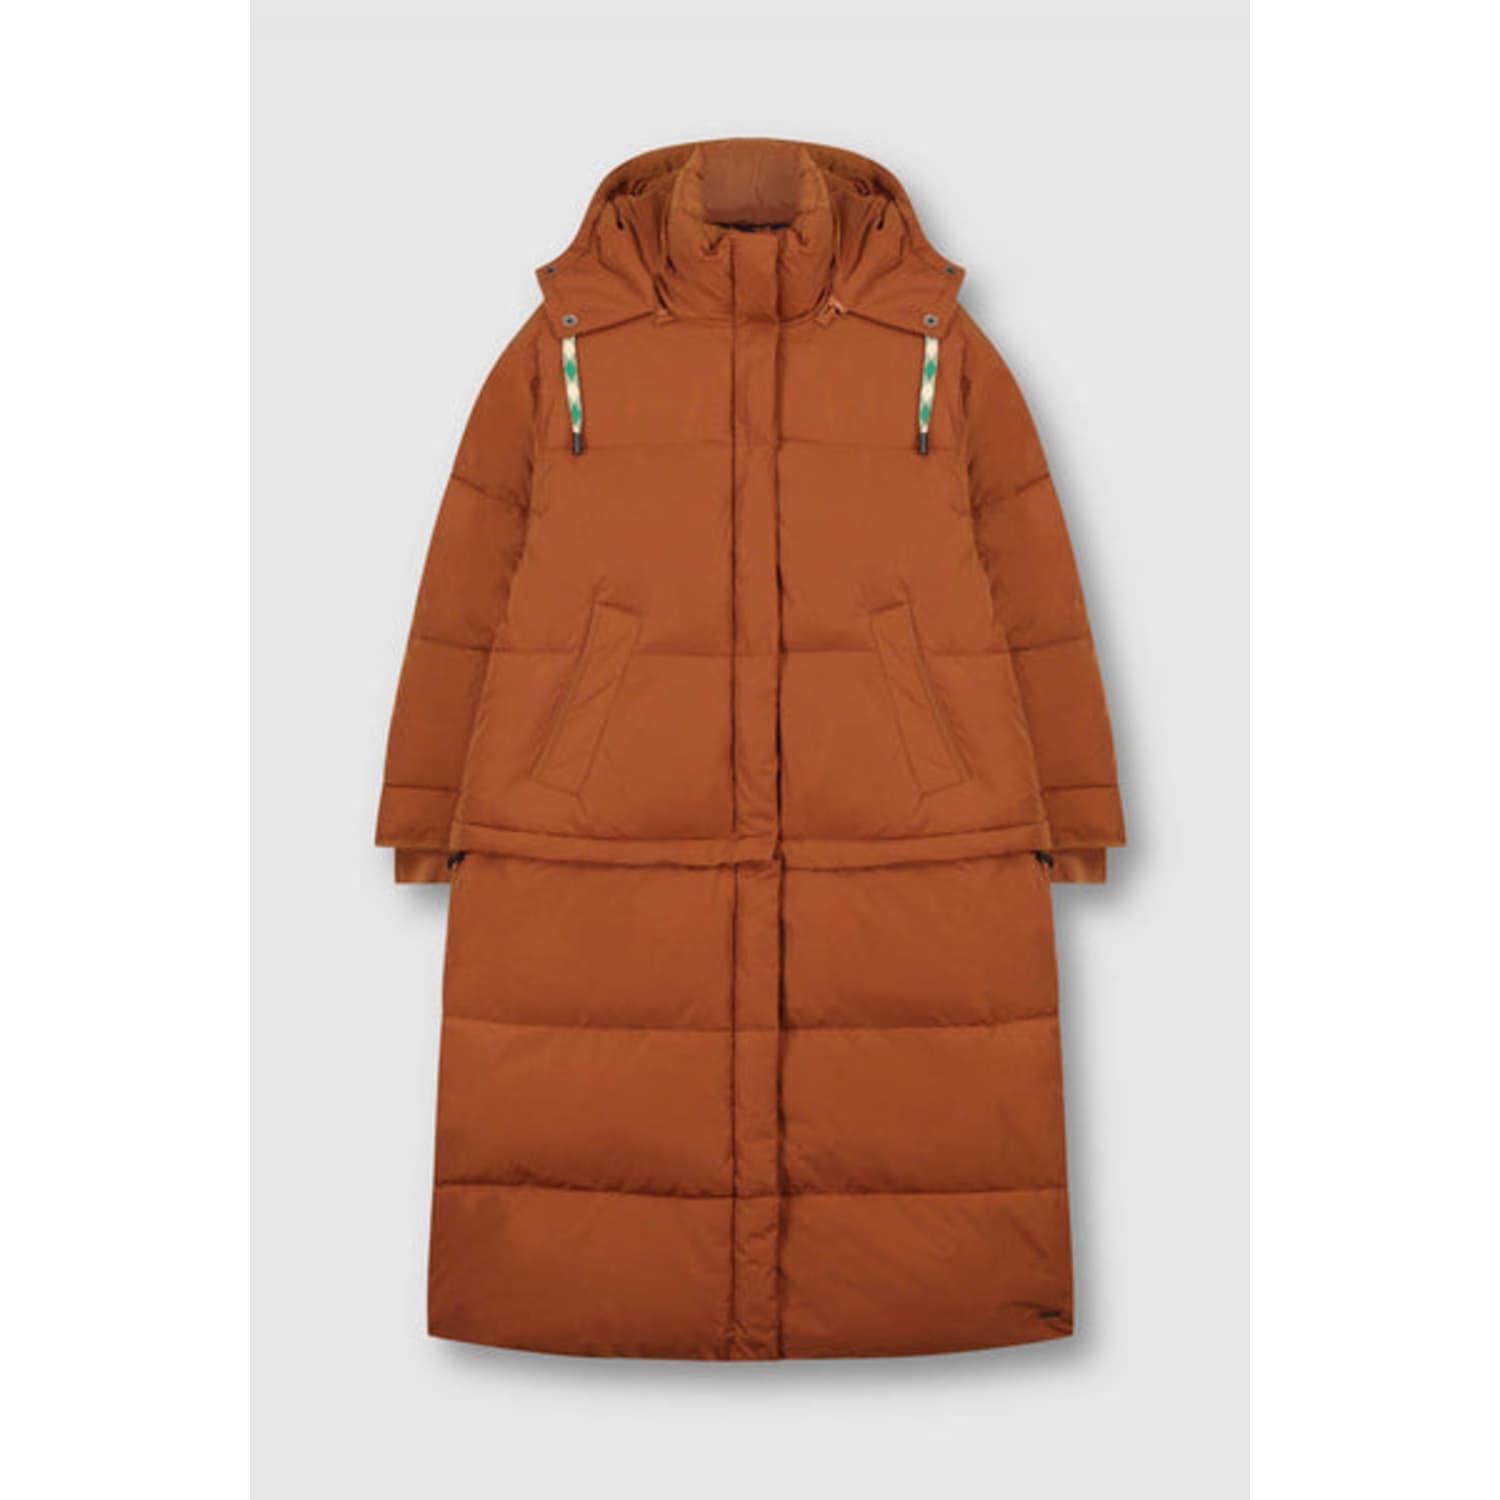 Rino & Pelle Jola Coat in Brown | Lyst UK